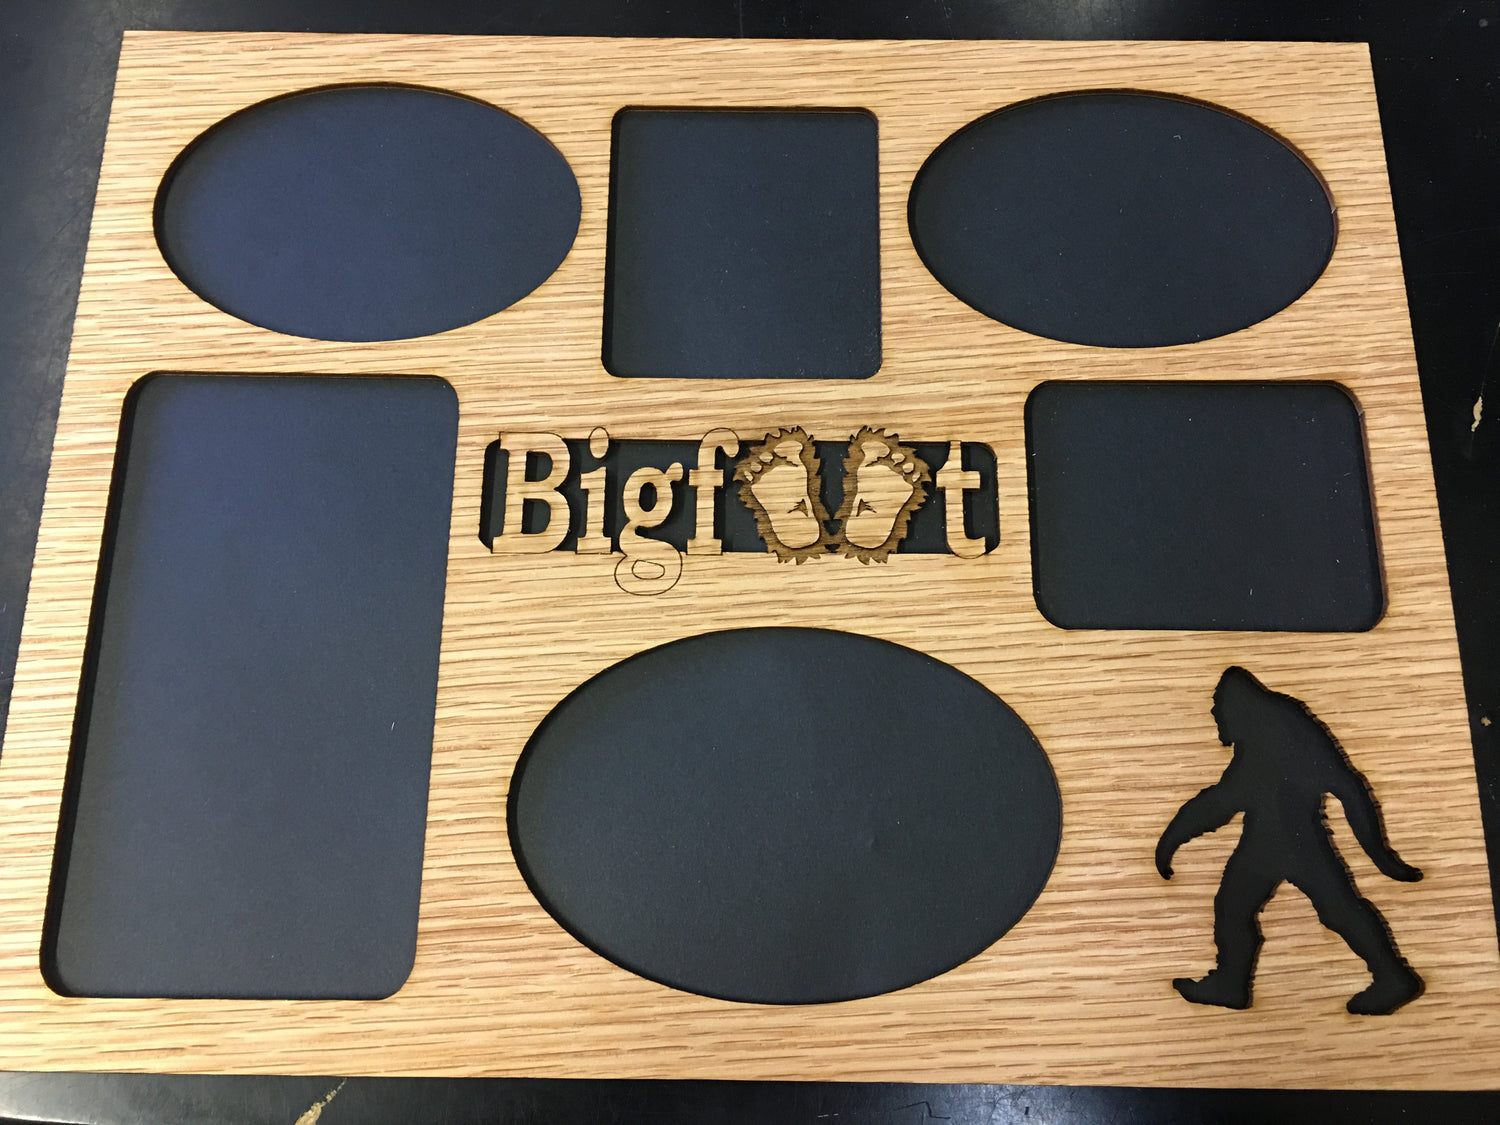 Bigfoot Picture Frame, Picture Frame, home decor, laser engraved - Legacy Images